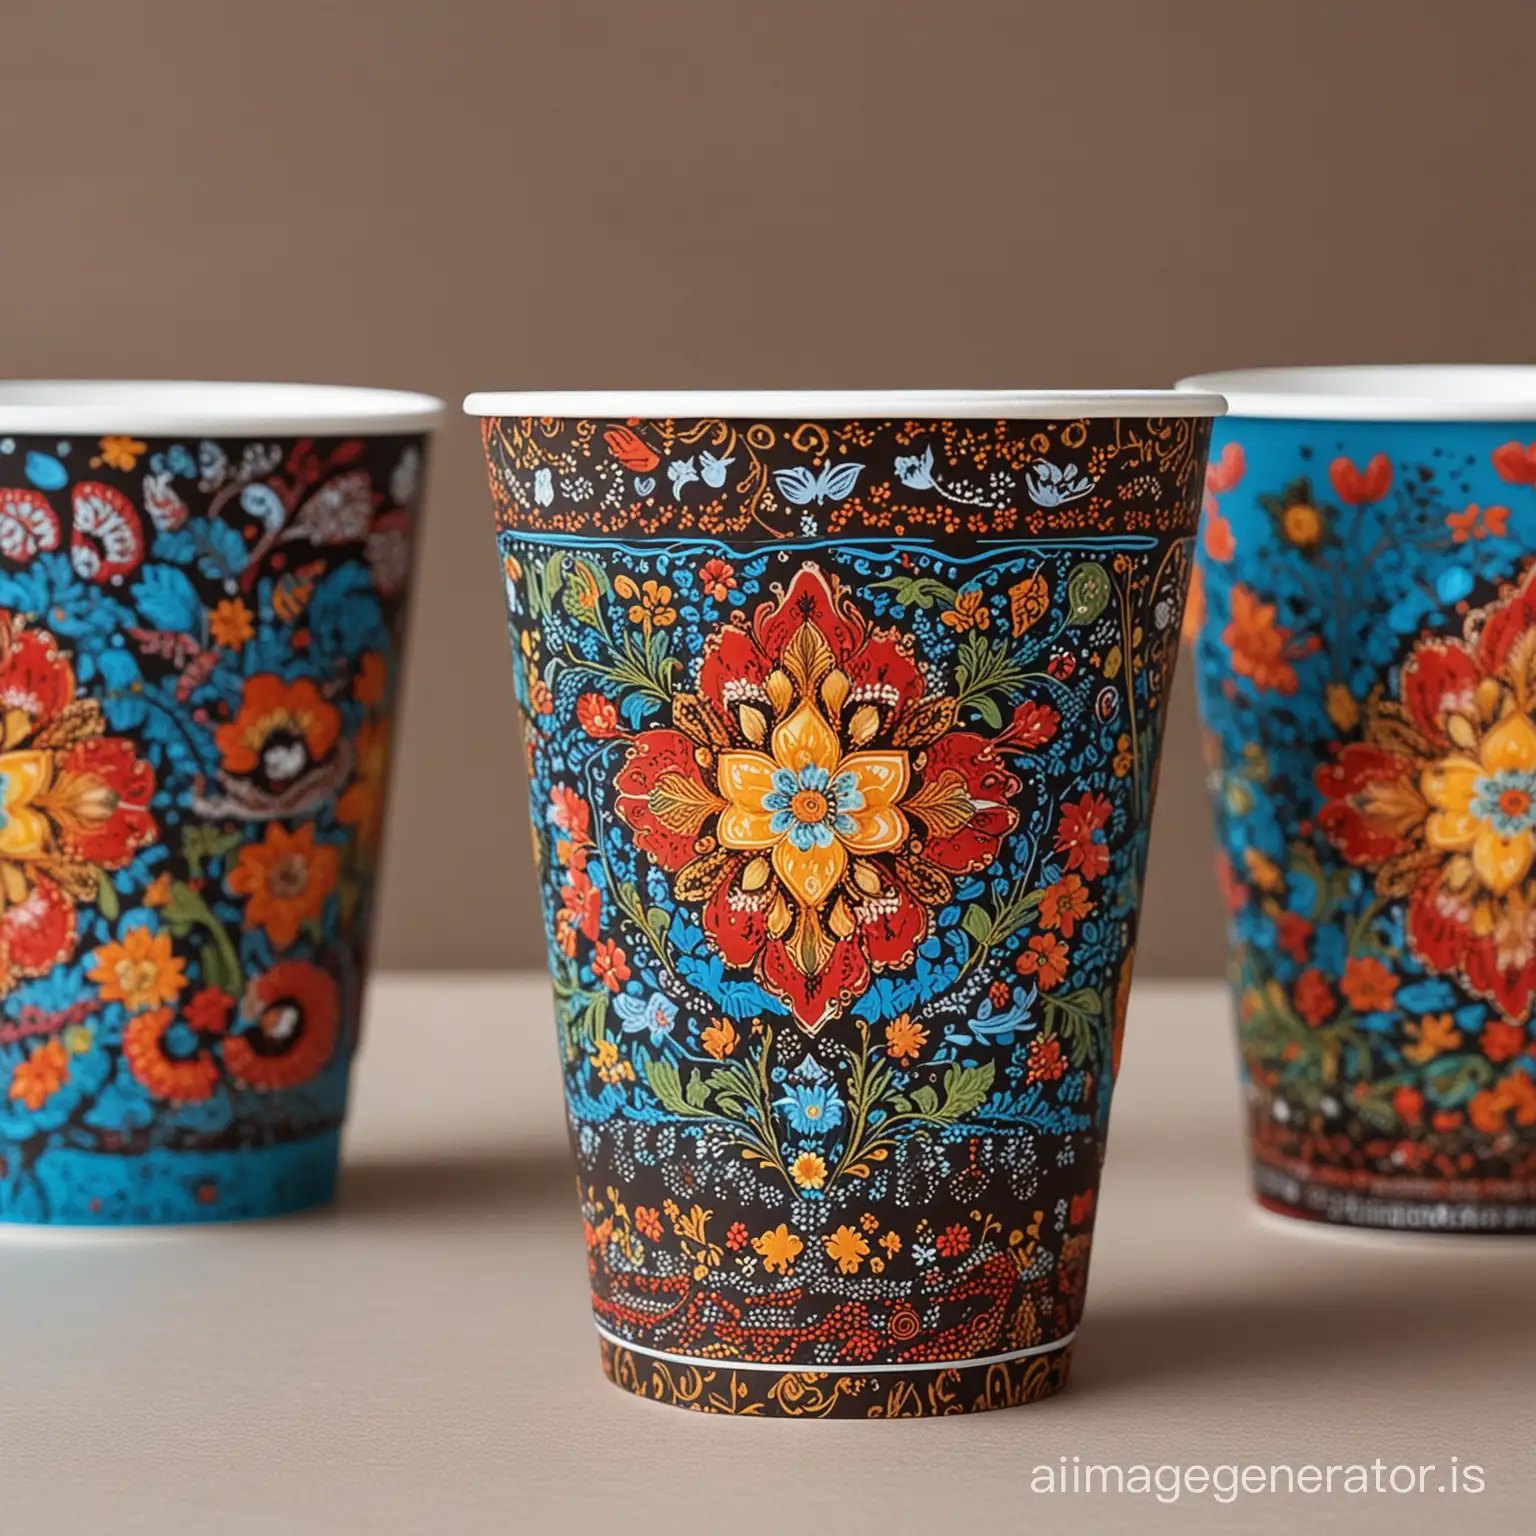 Russian-Folk-ArtInspired-Coffee-Cup-Design